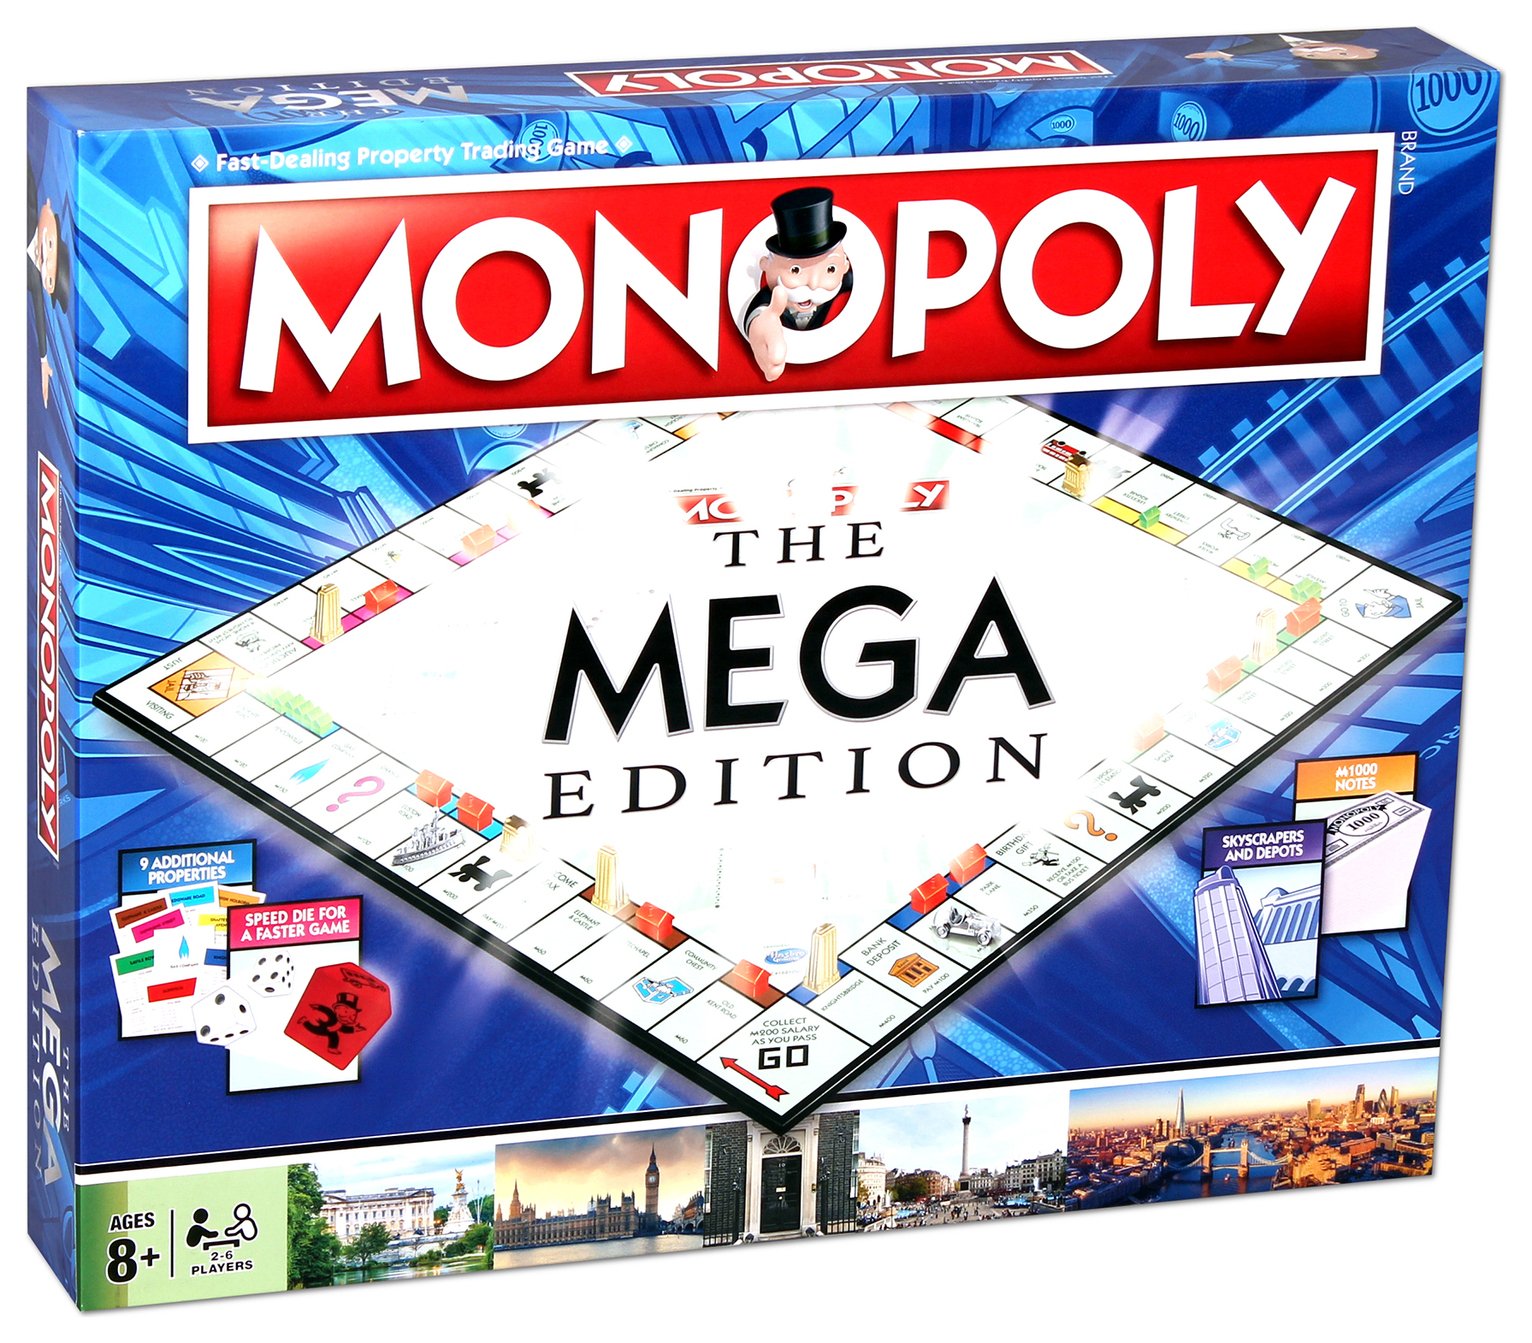 Mega Monopoly Game